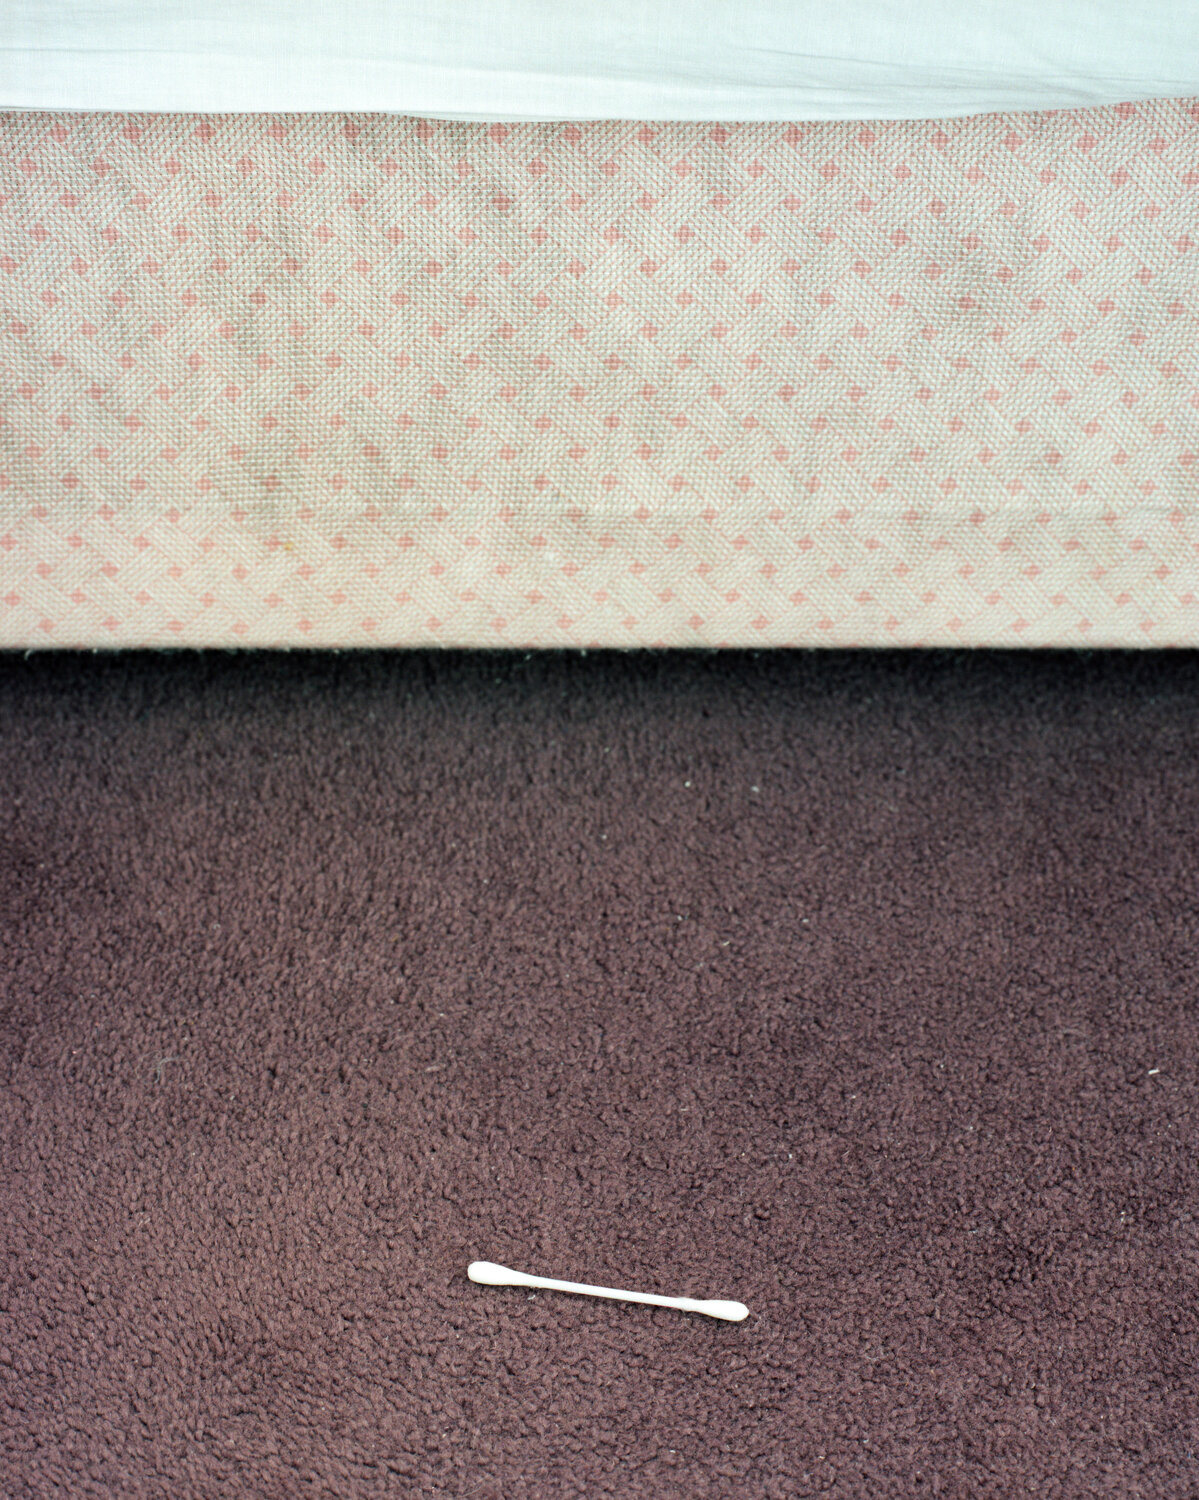 24) Q-tip On The Floor.jpg